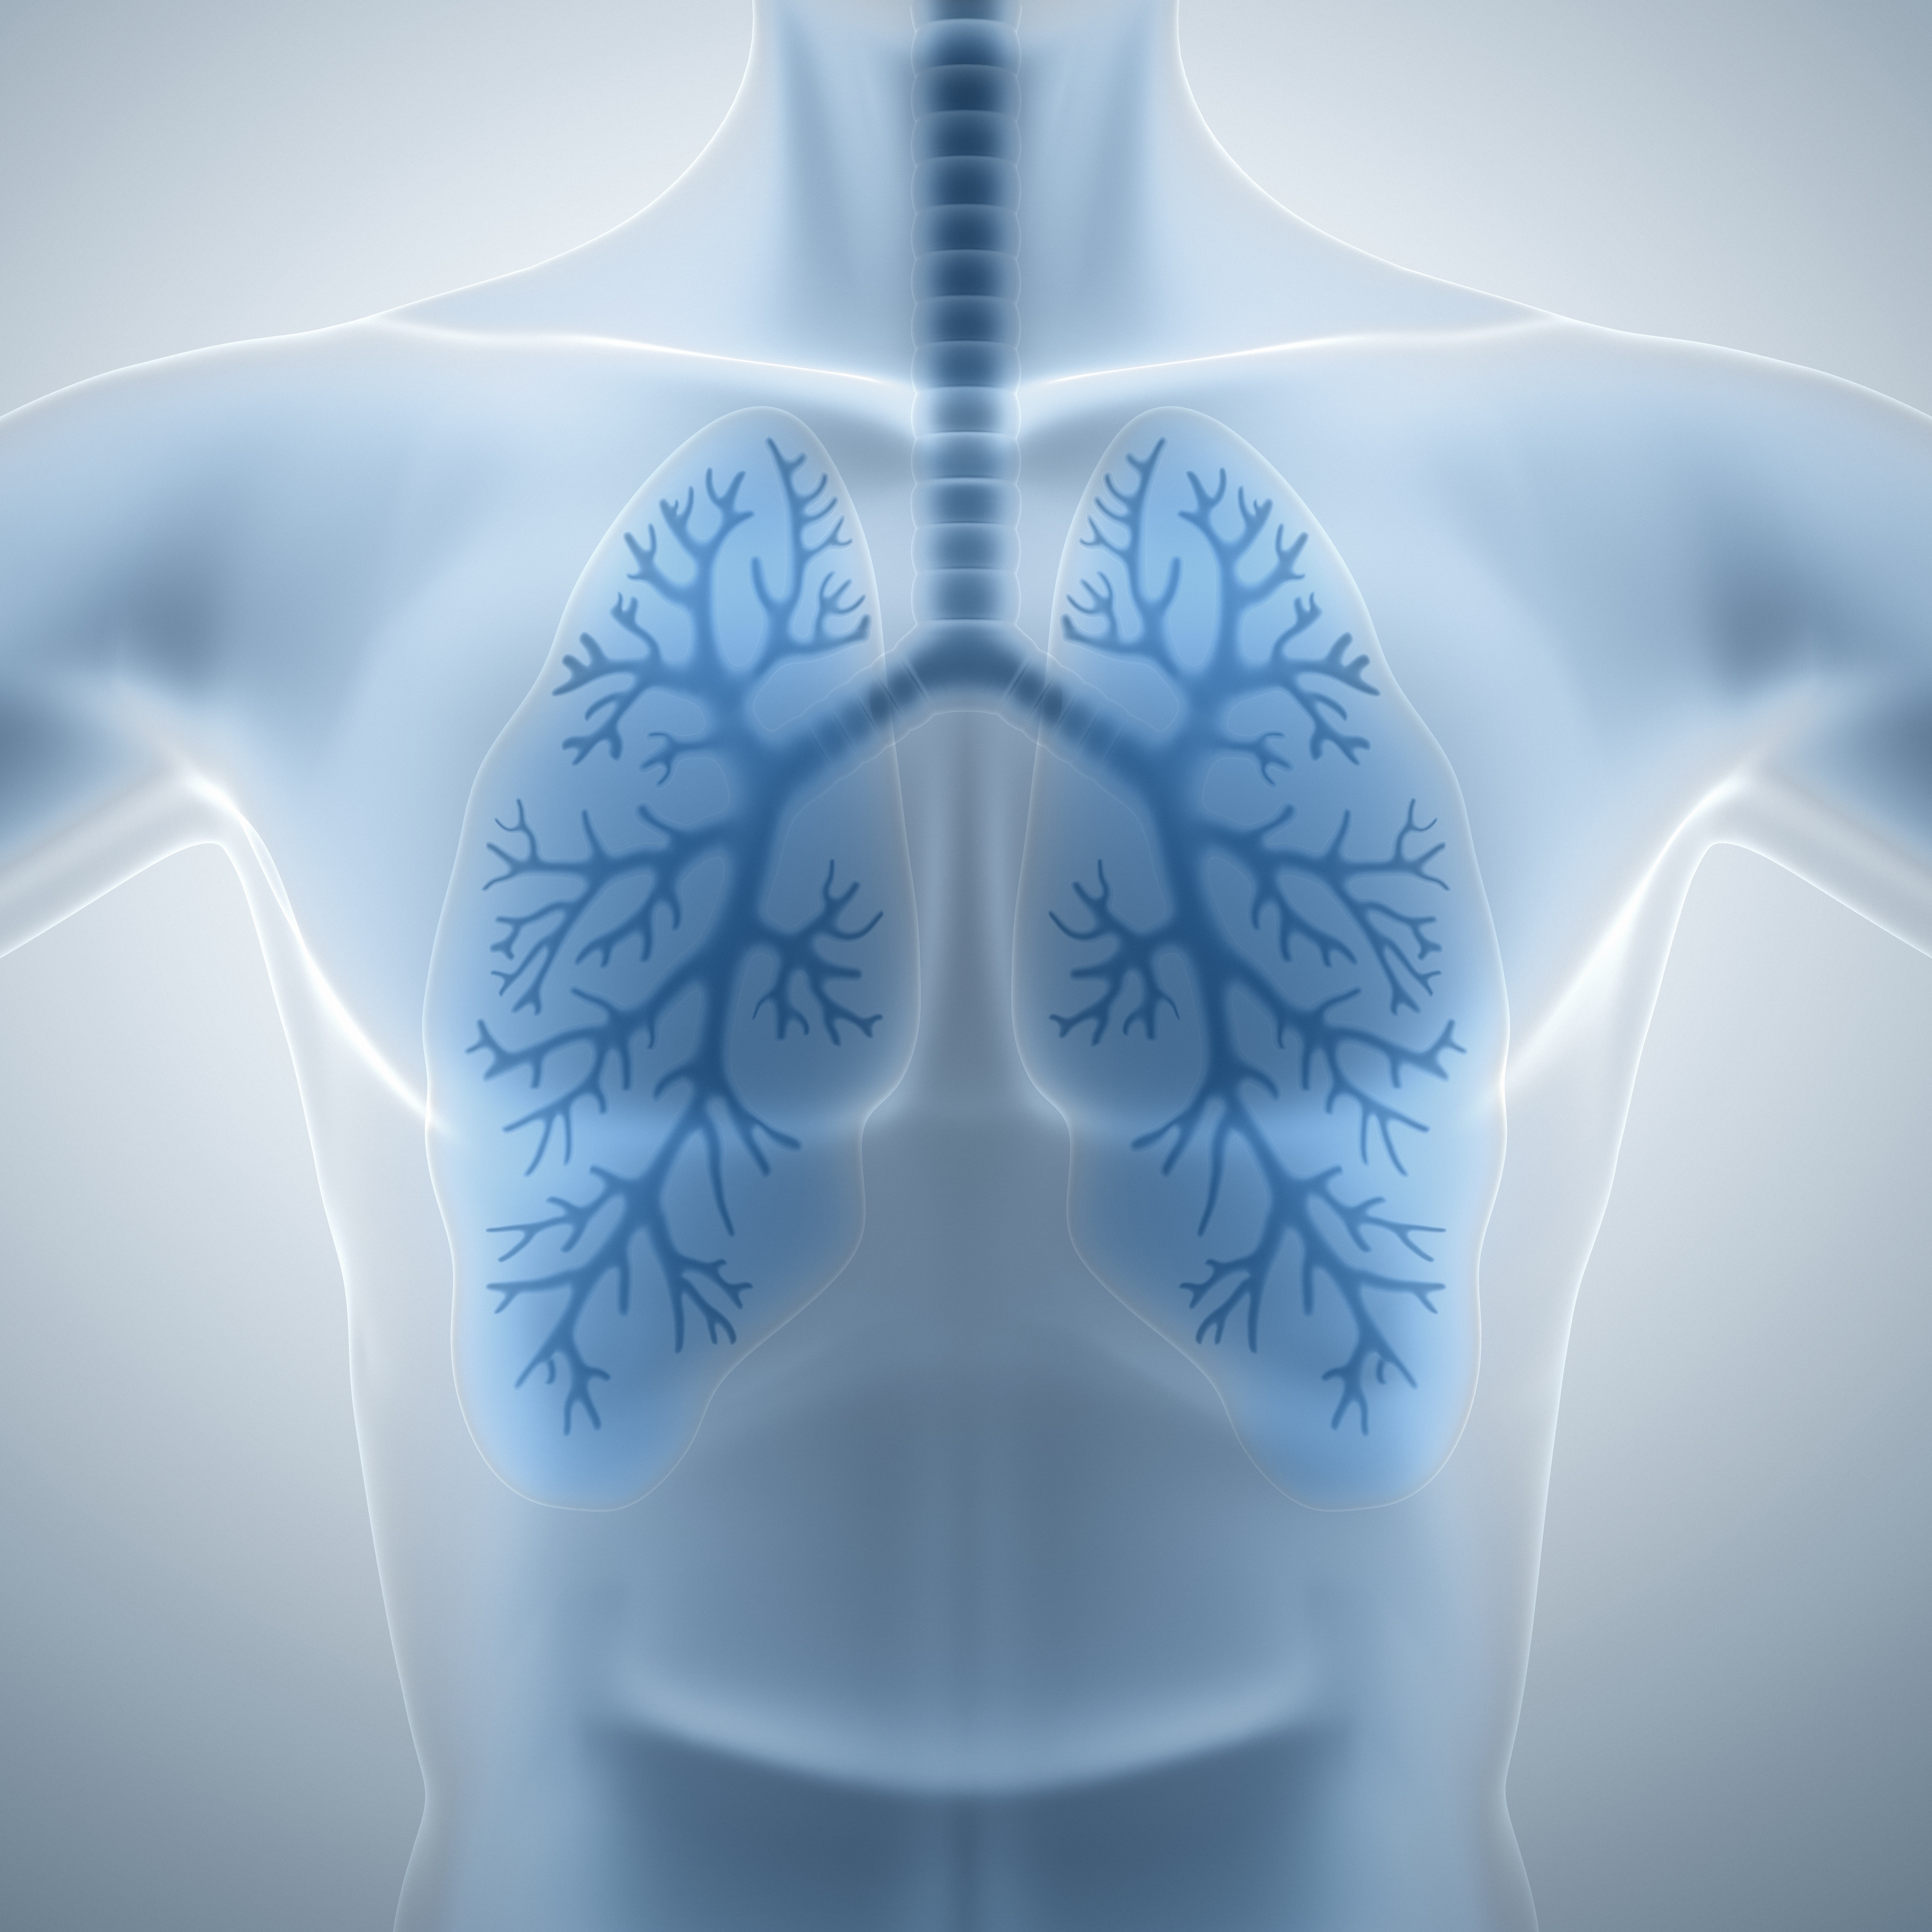 Inhaled treatments for pulmonary fibrosis